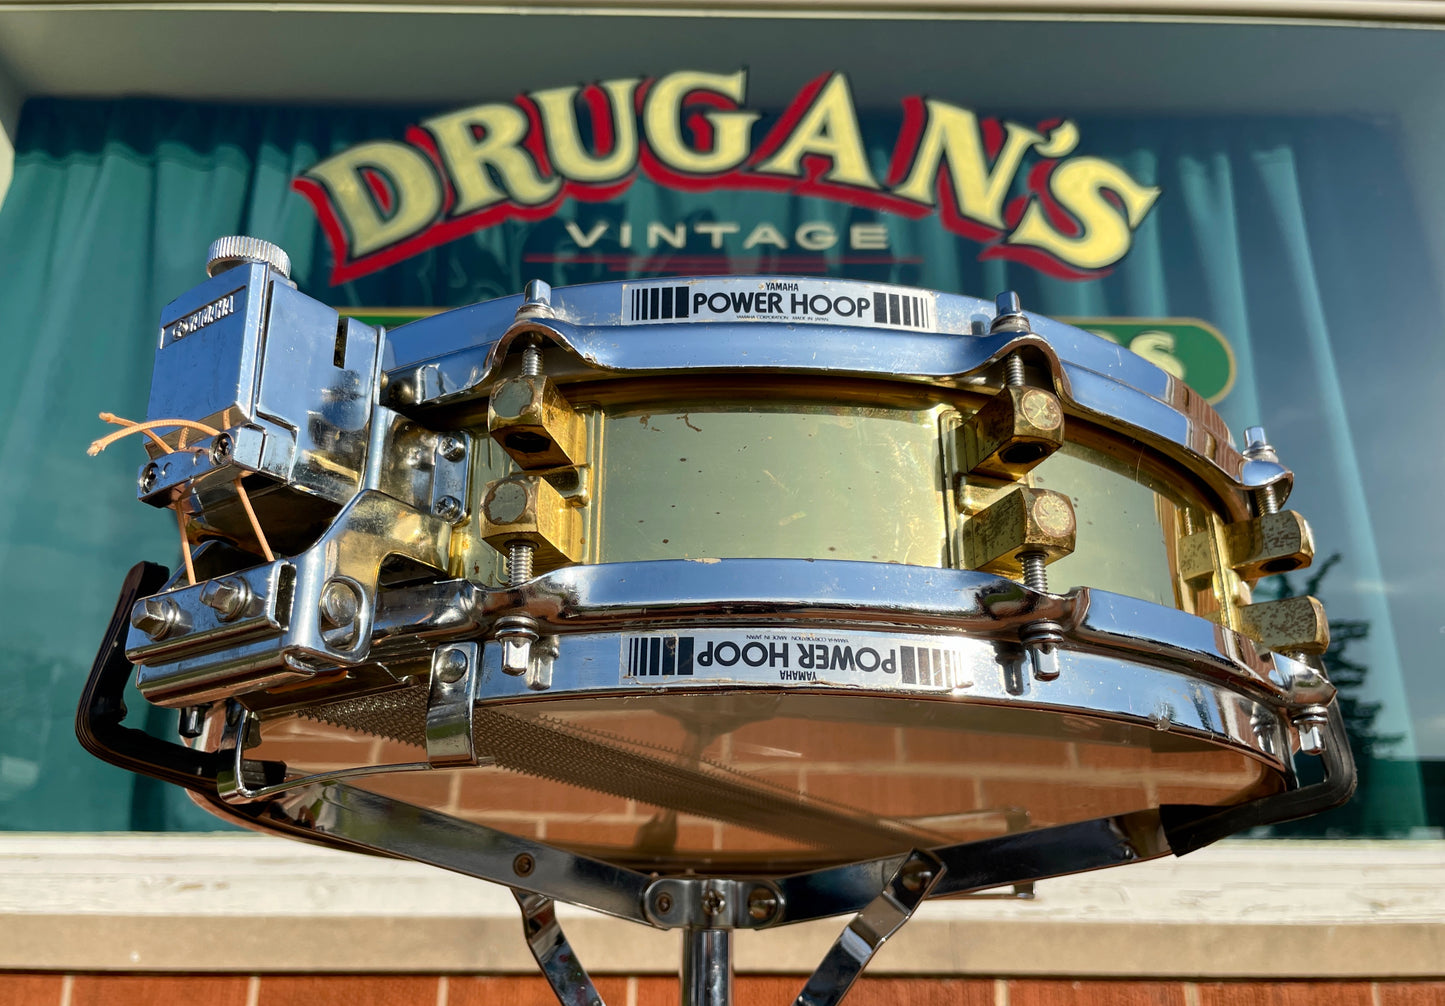 1980s Yamaha SD493 3.5x14 Brass Piccolo Snare Drum 10-Lug